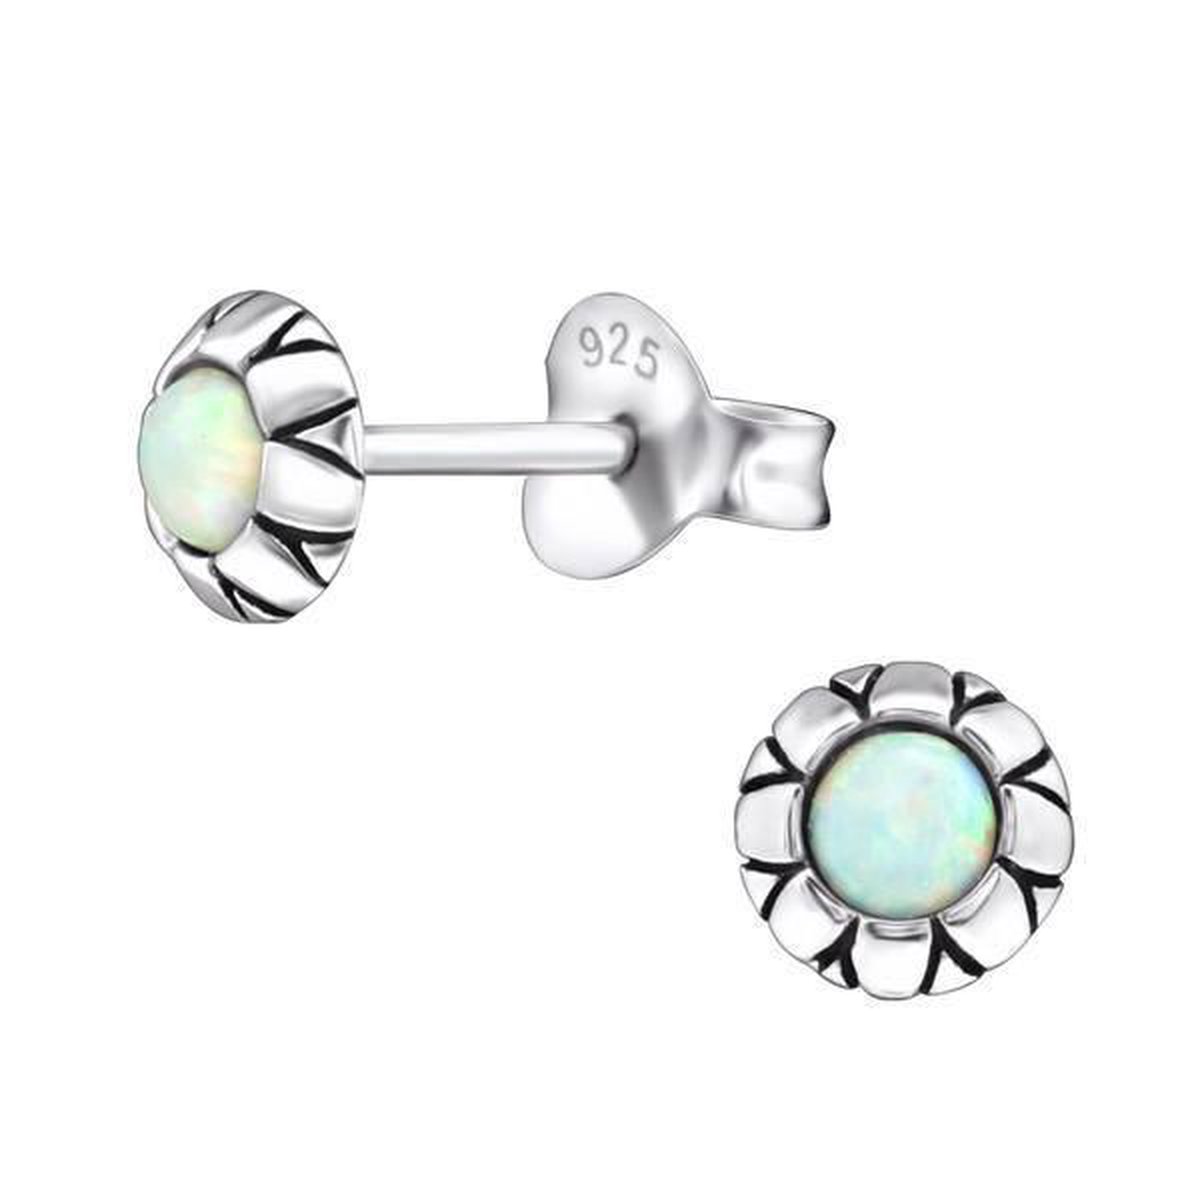 Aramat jewels ® - Zilveren oorstekers rond multikleur opaal 925 zilver 5mm